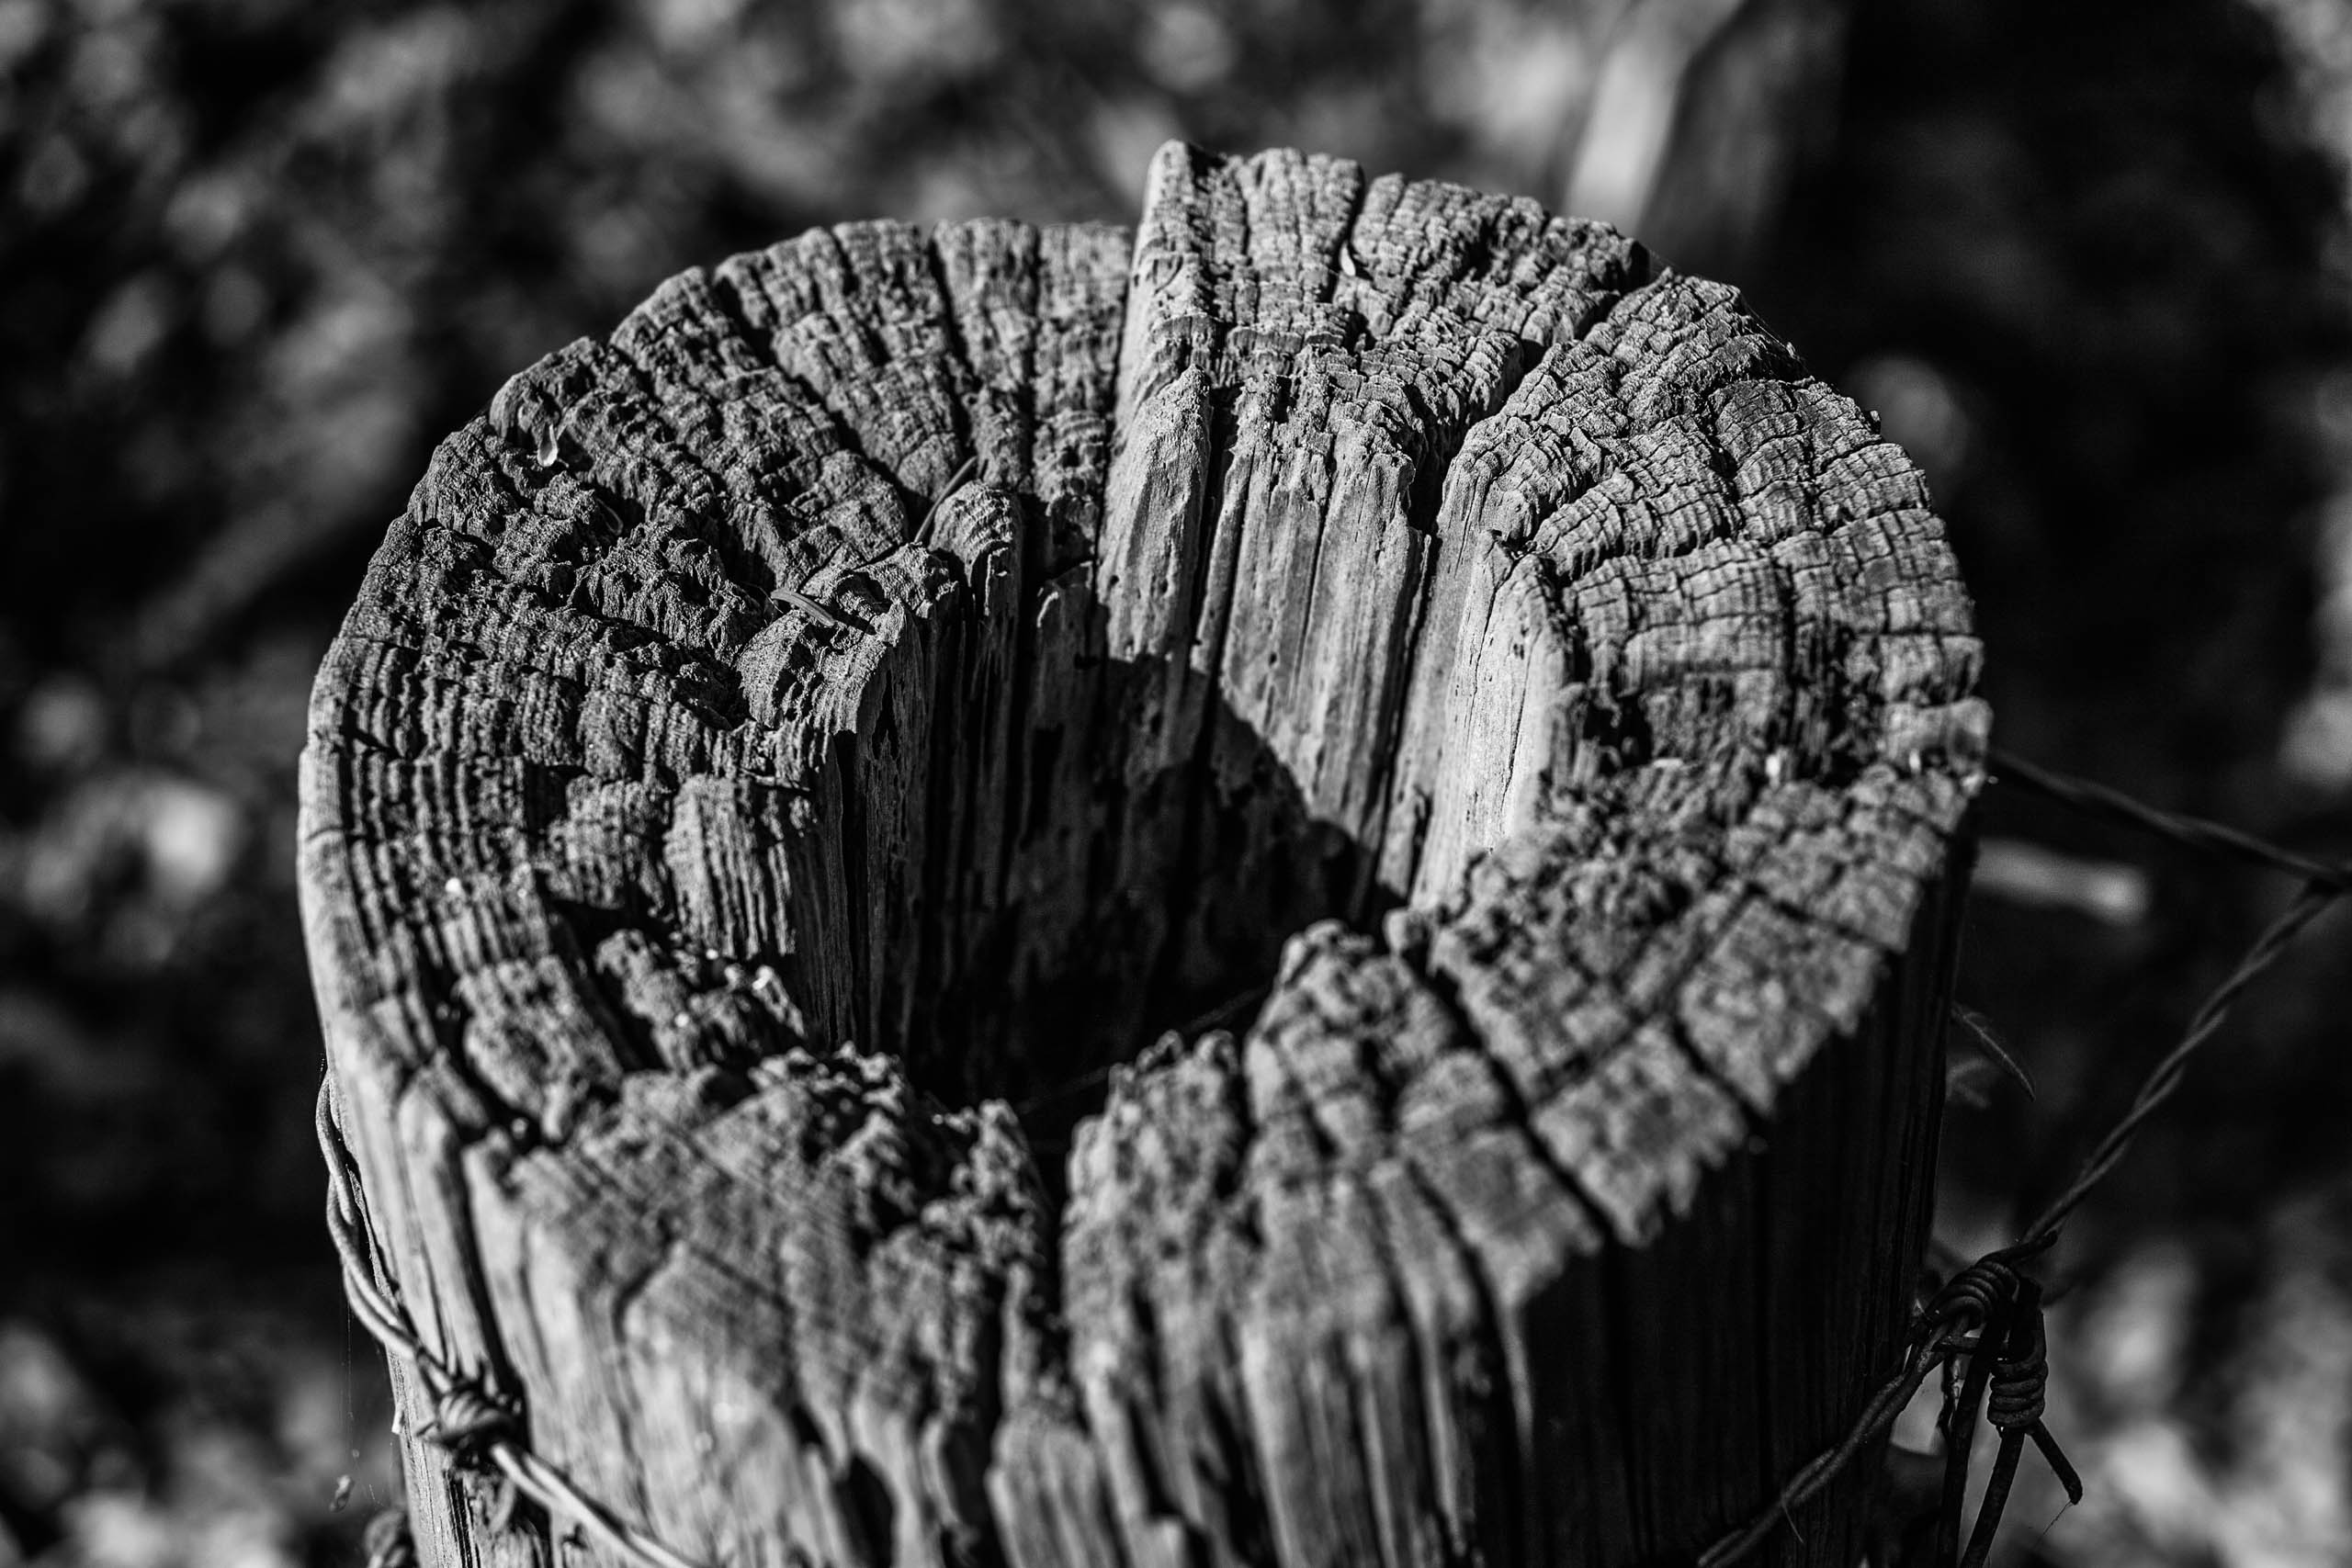 Holz in Form - ein Baum lebt ewig!